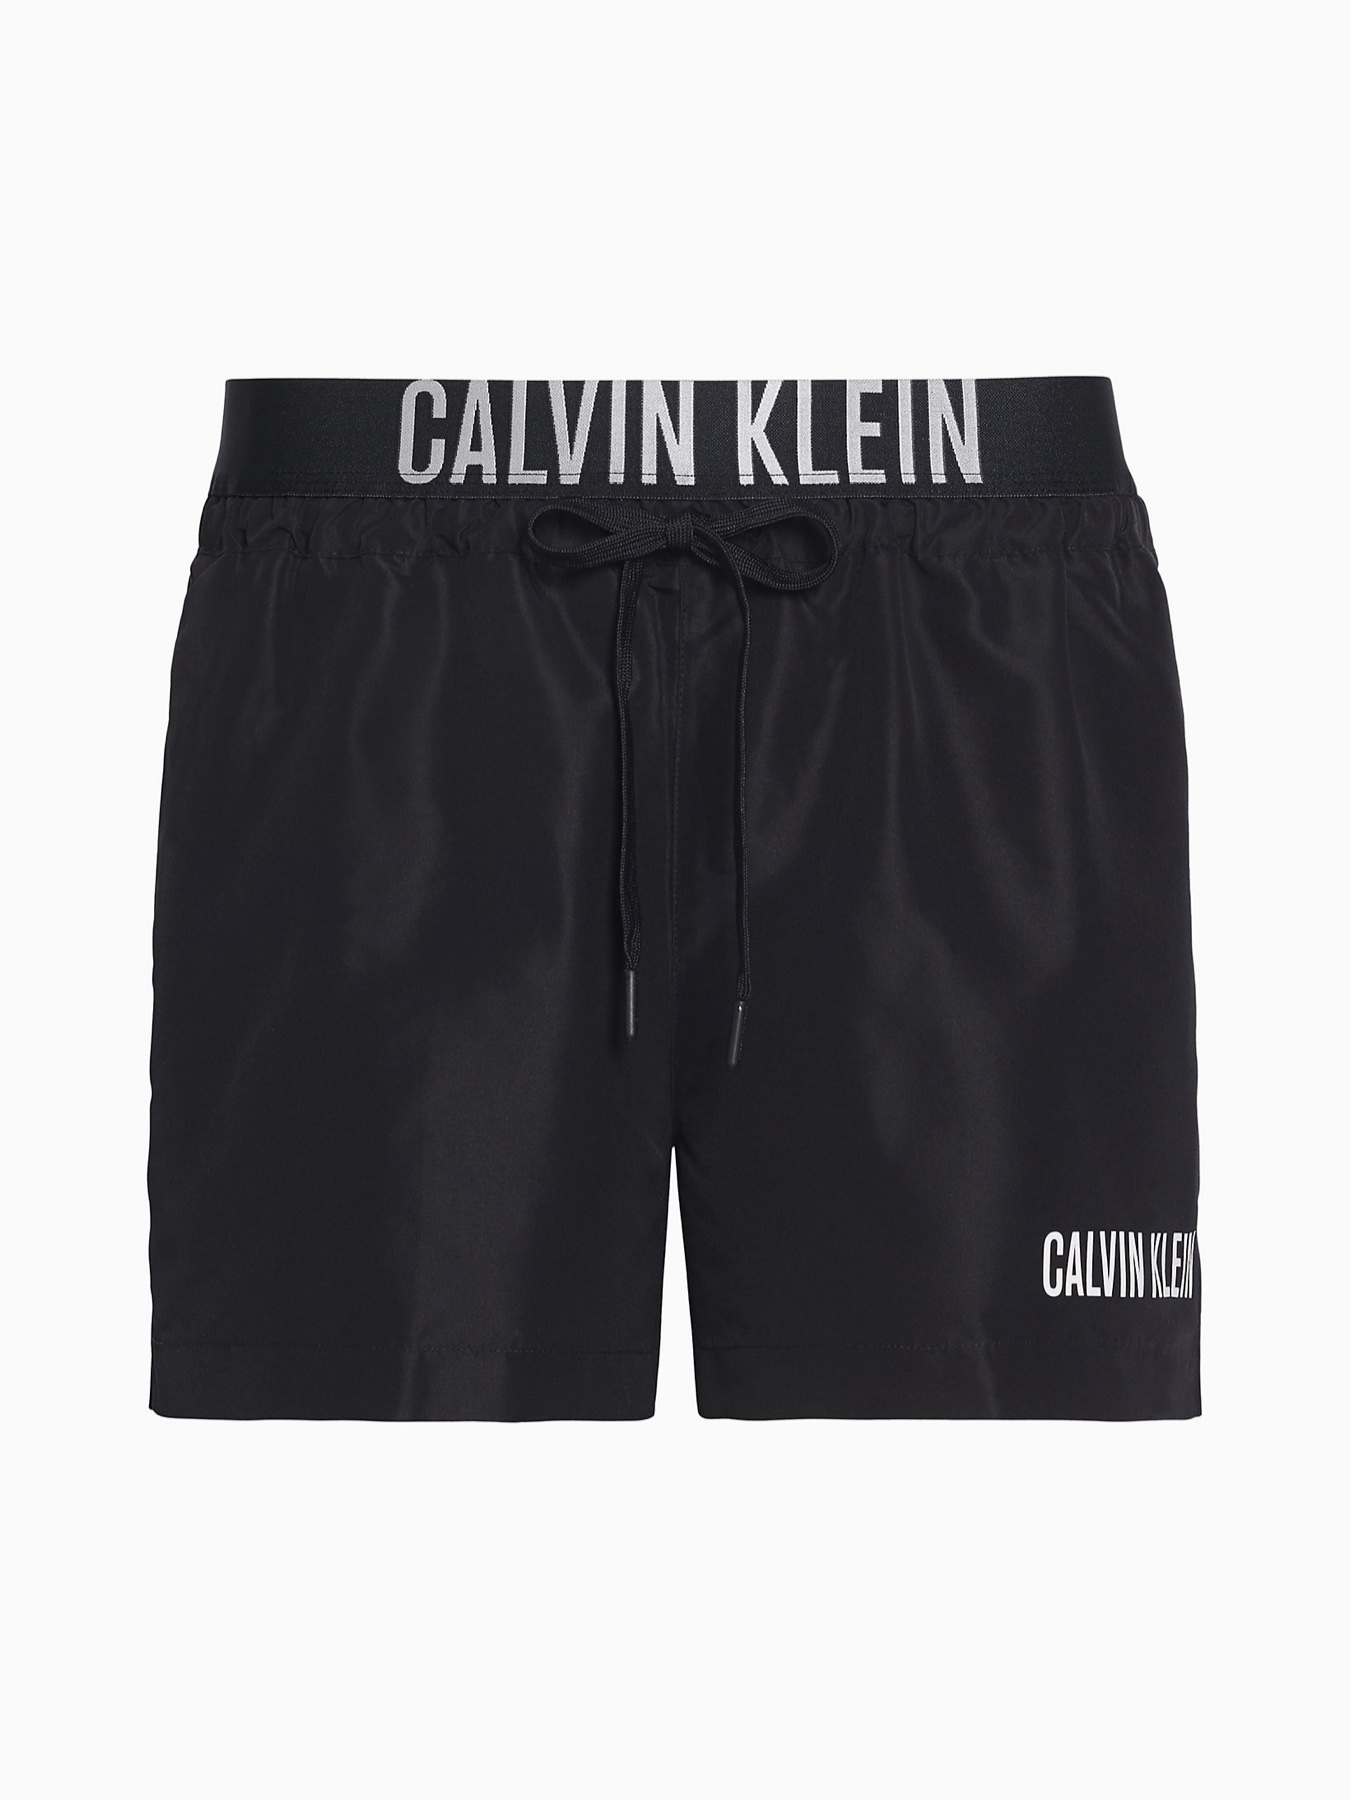 Calvin Klein Double Brasted Swim Trunk